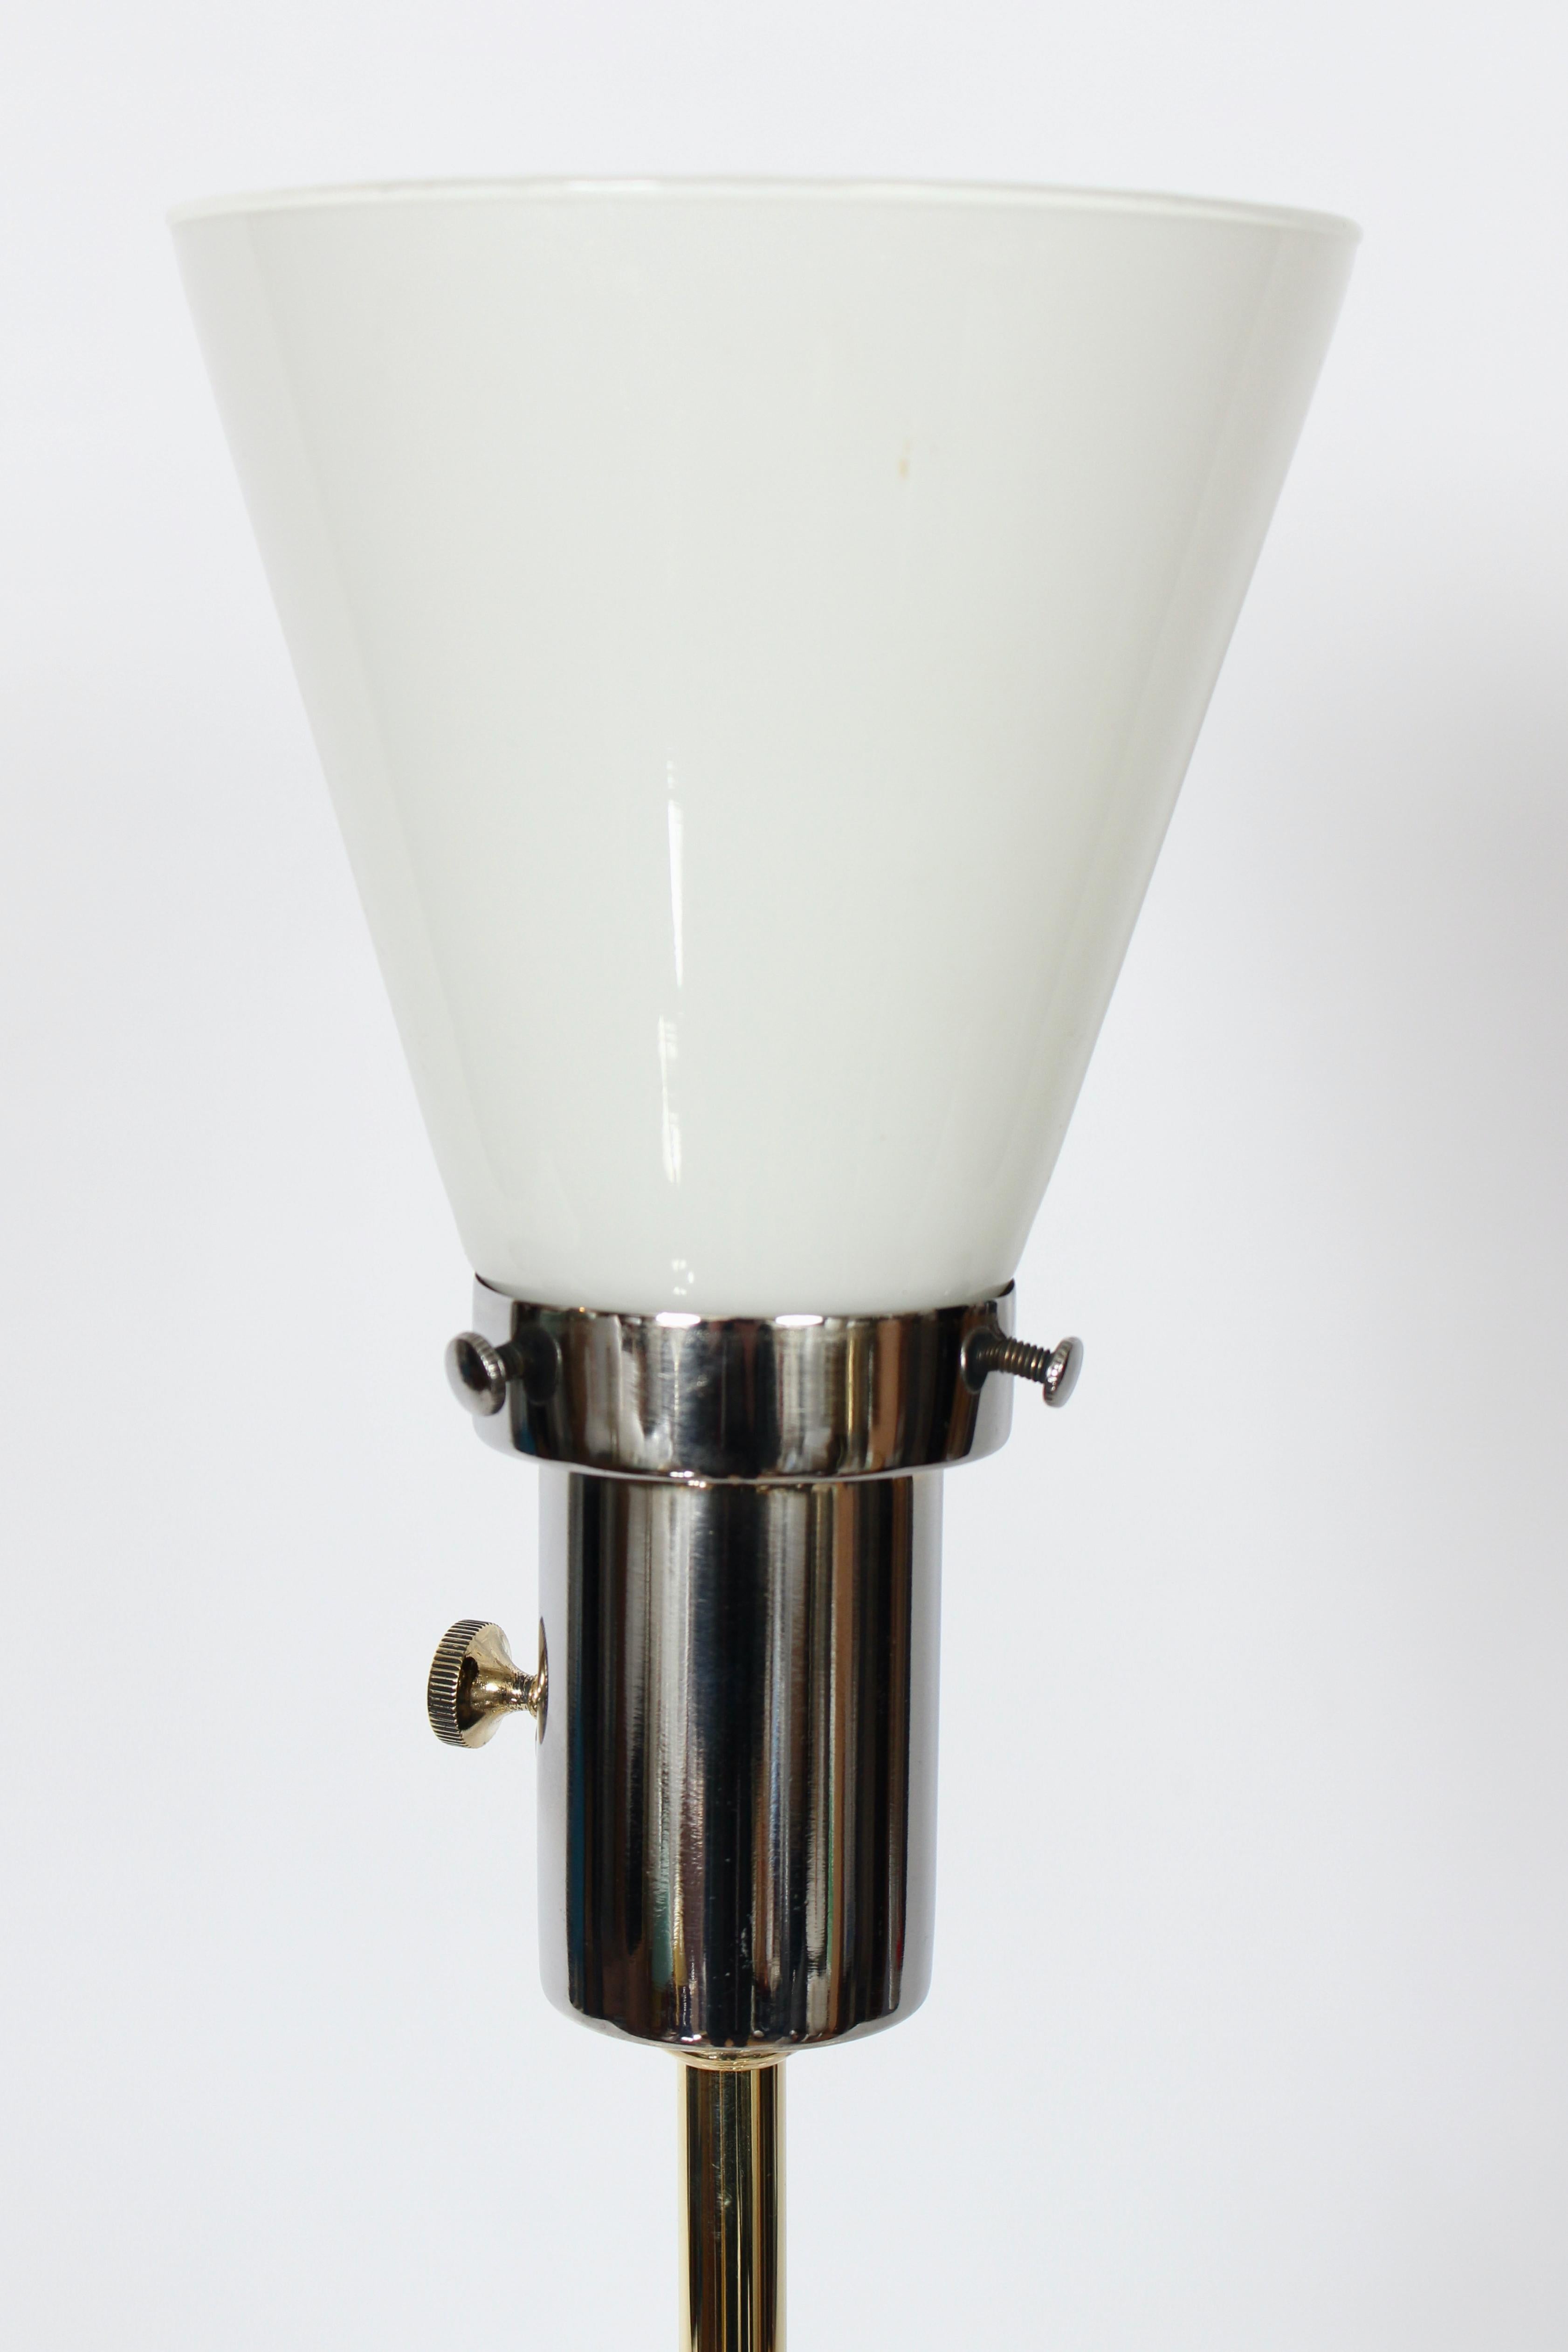 Vintage Mutual Sunset Lamp Co. Atomic Sputnik Polished Metals Table Lamp, 1950's For Sale 5